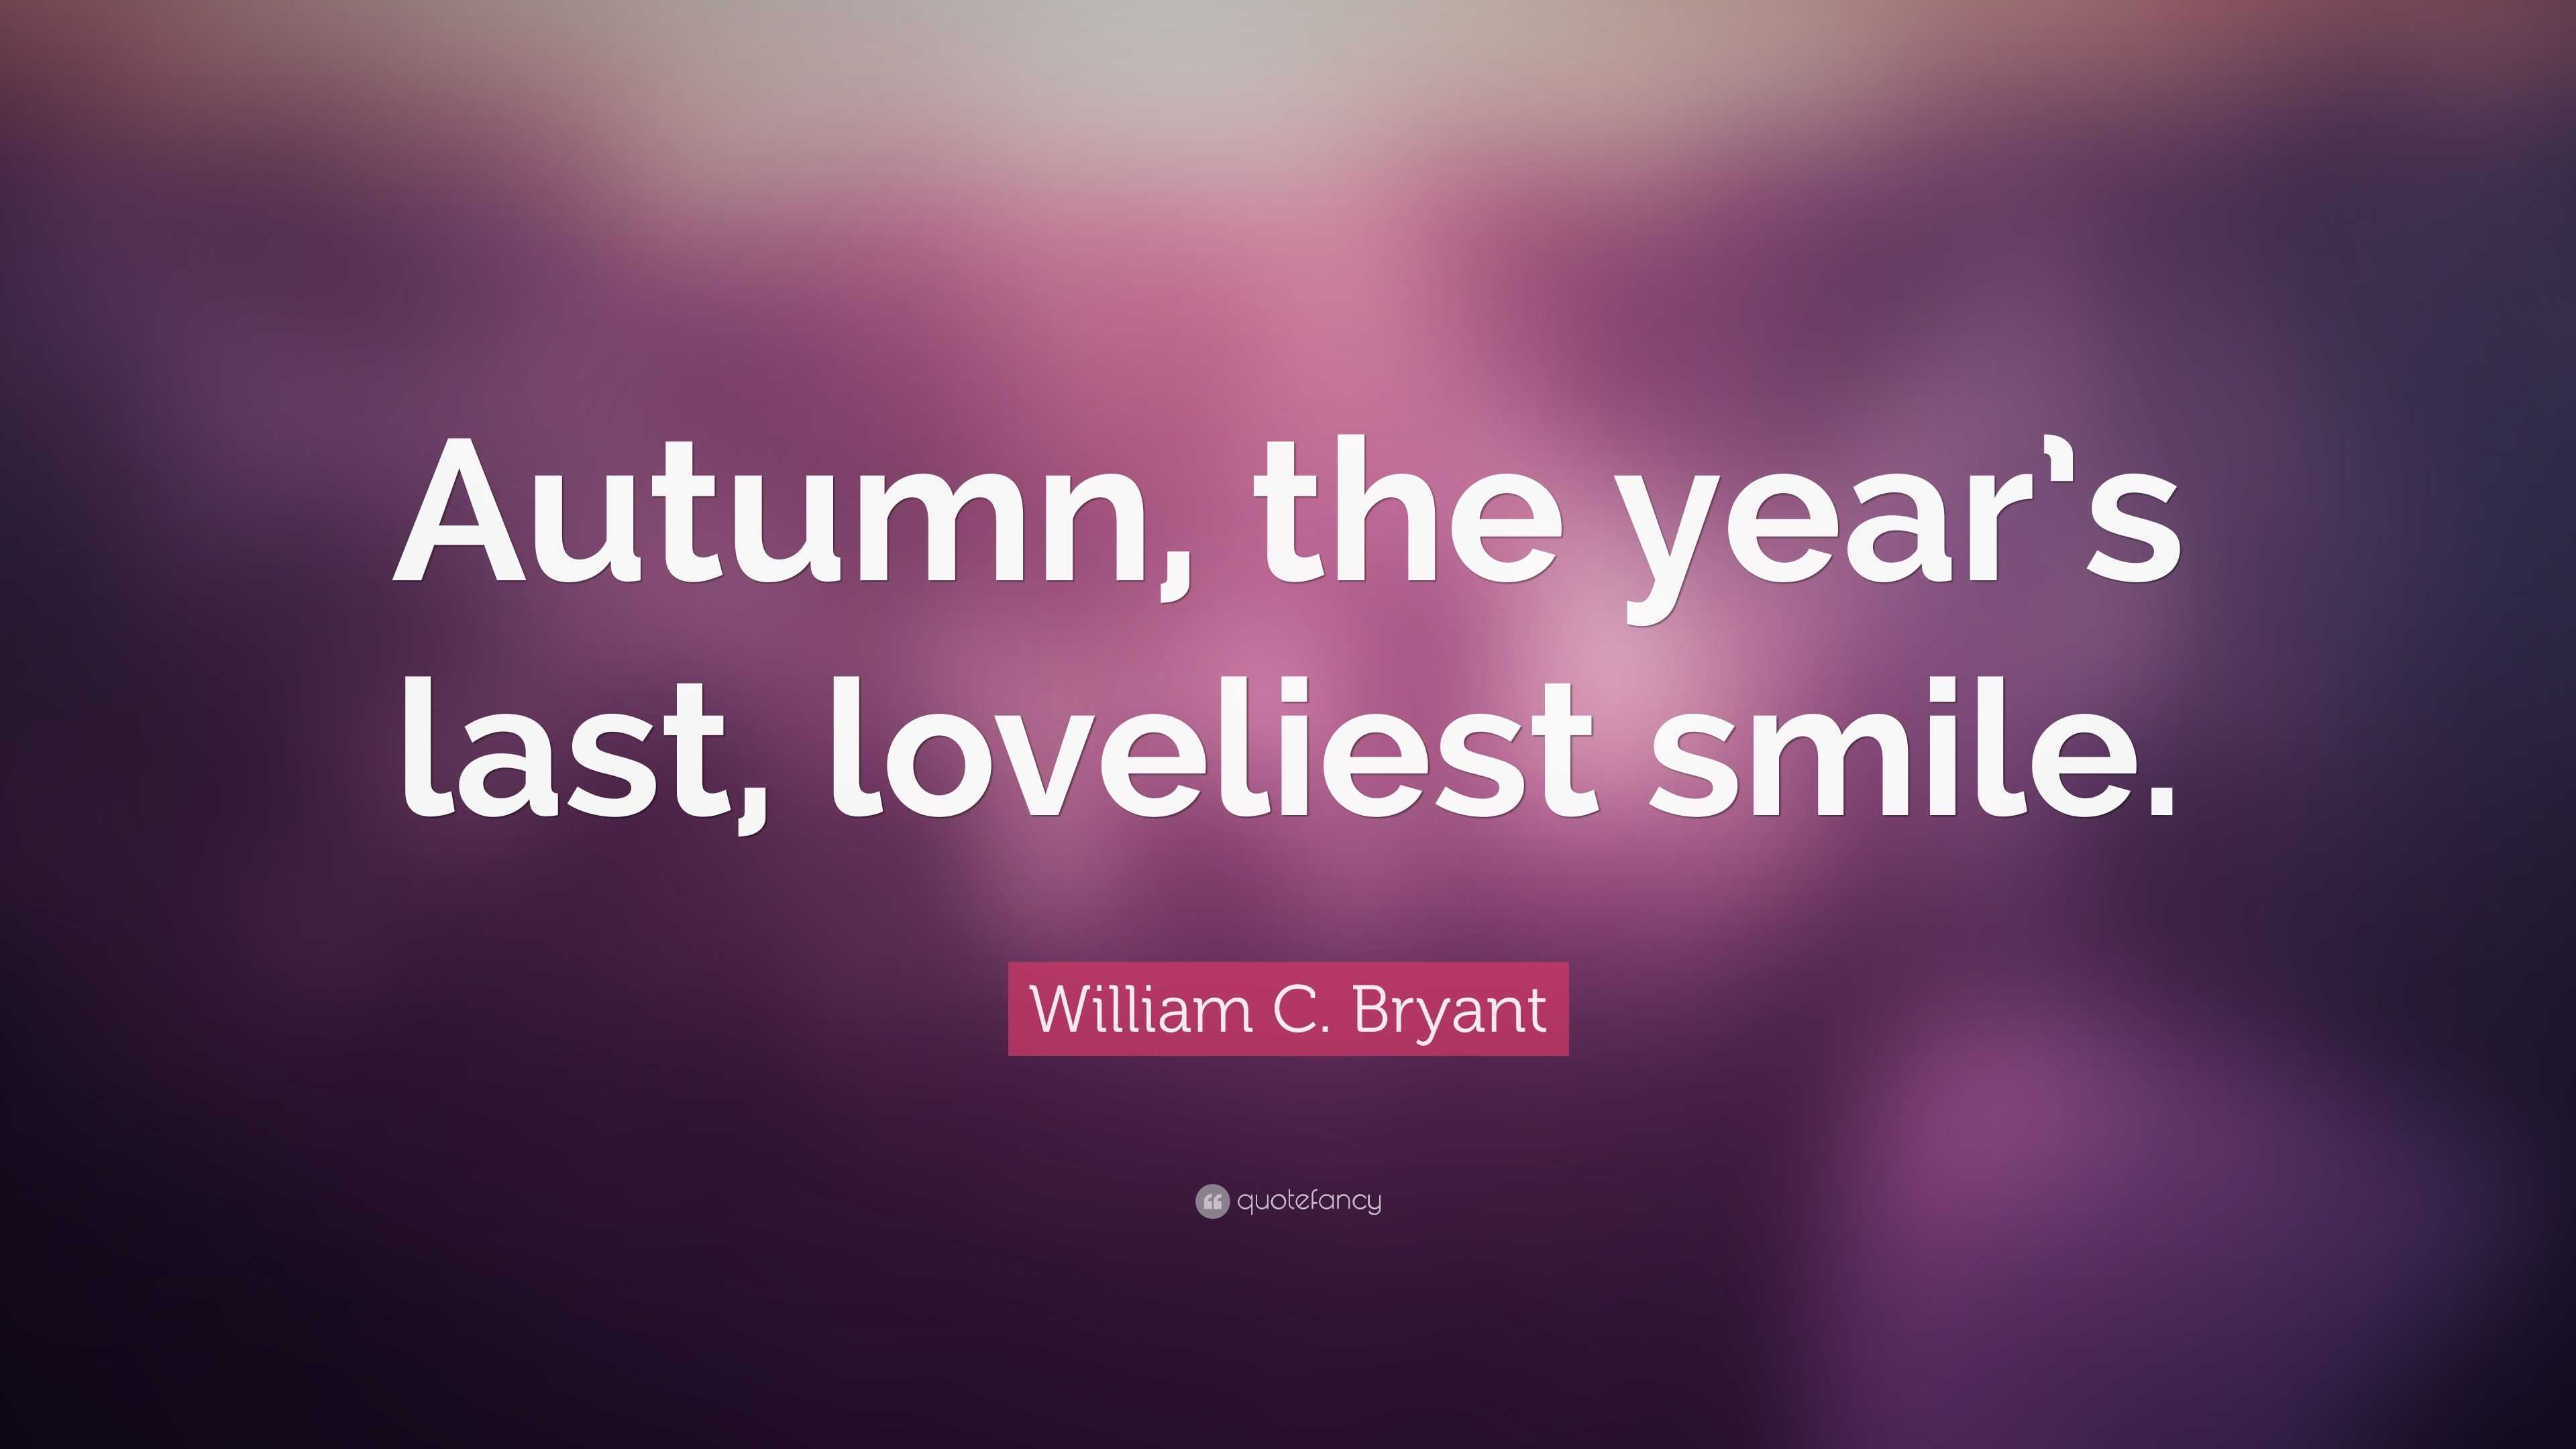 William C. Bryant Quote: “Autumn, the year’s last, loveliest smile.”